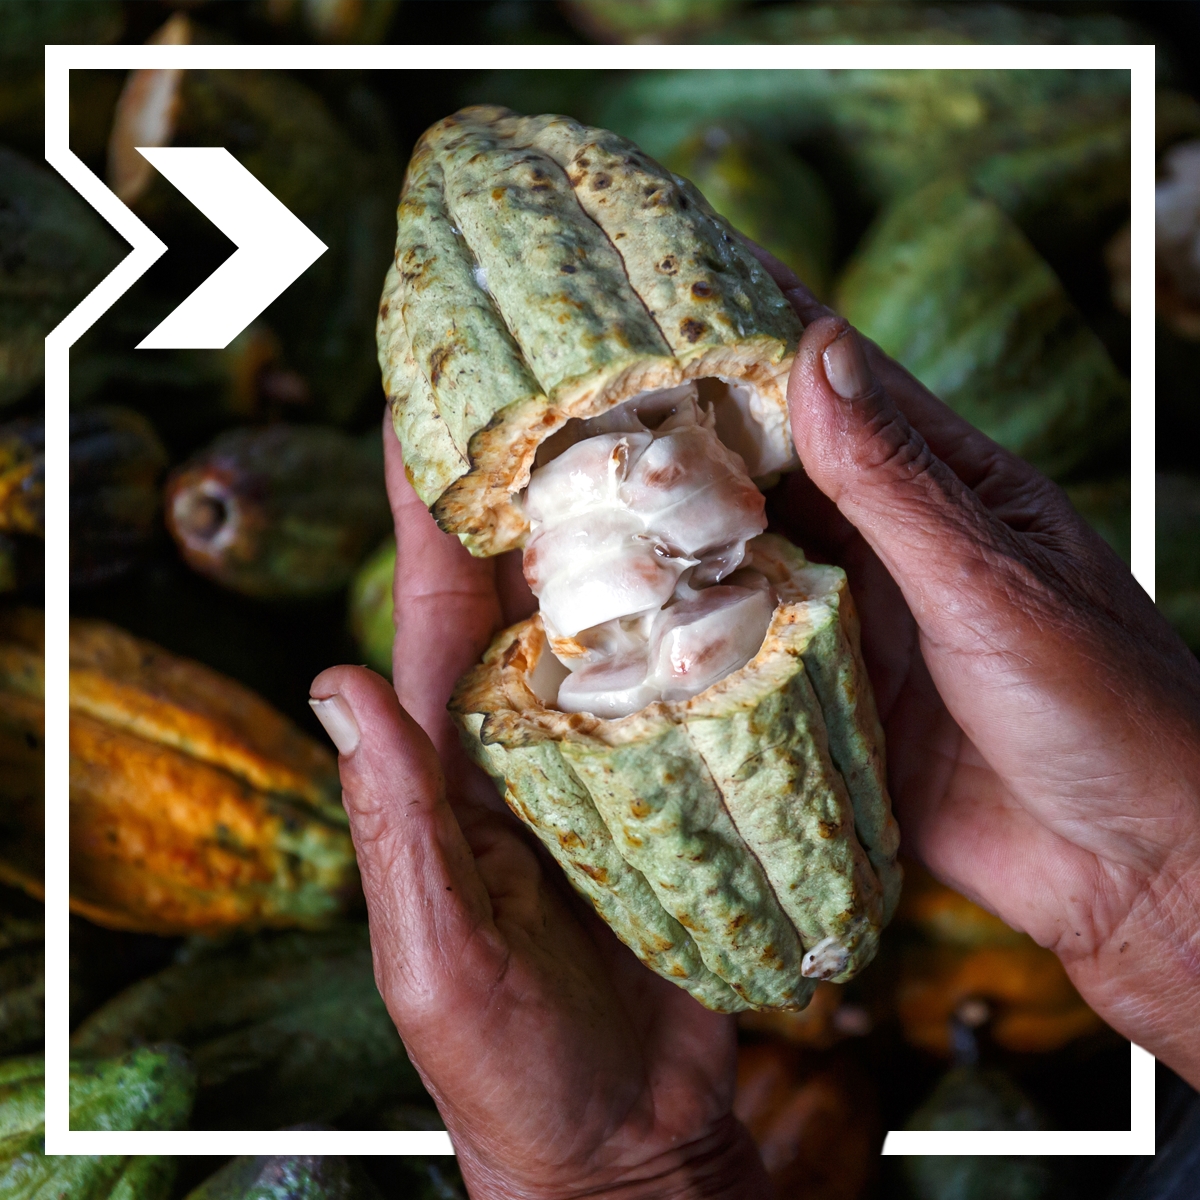 An African farmer holding a cocoa pod